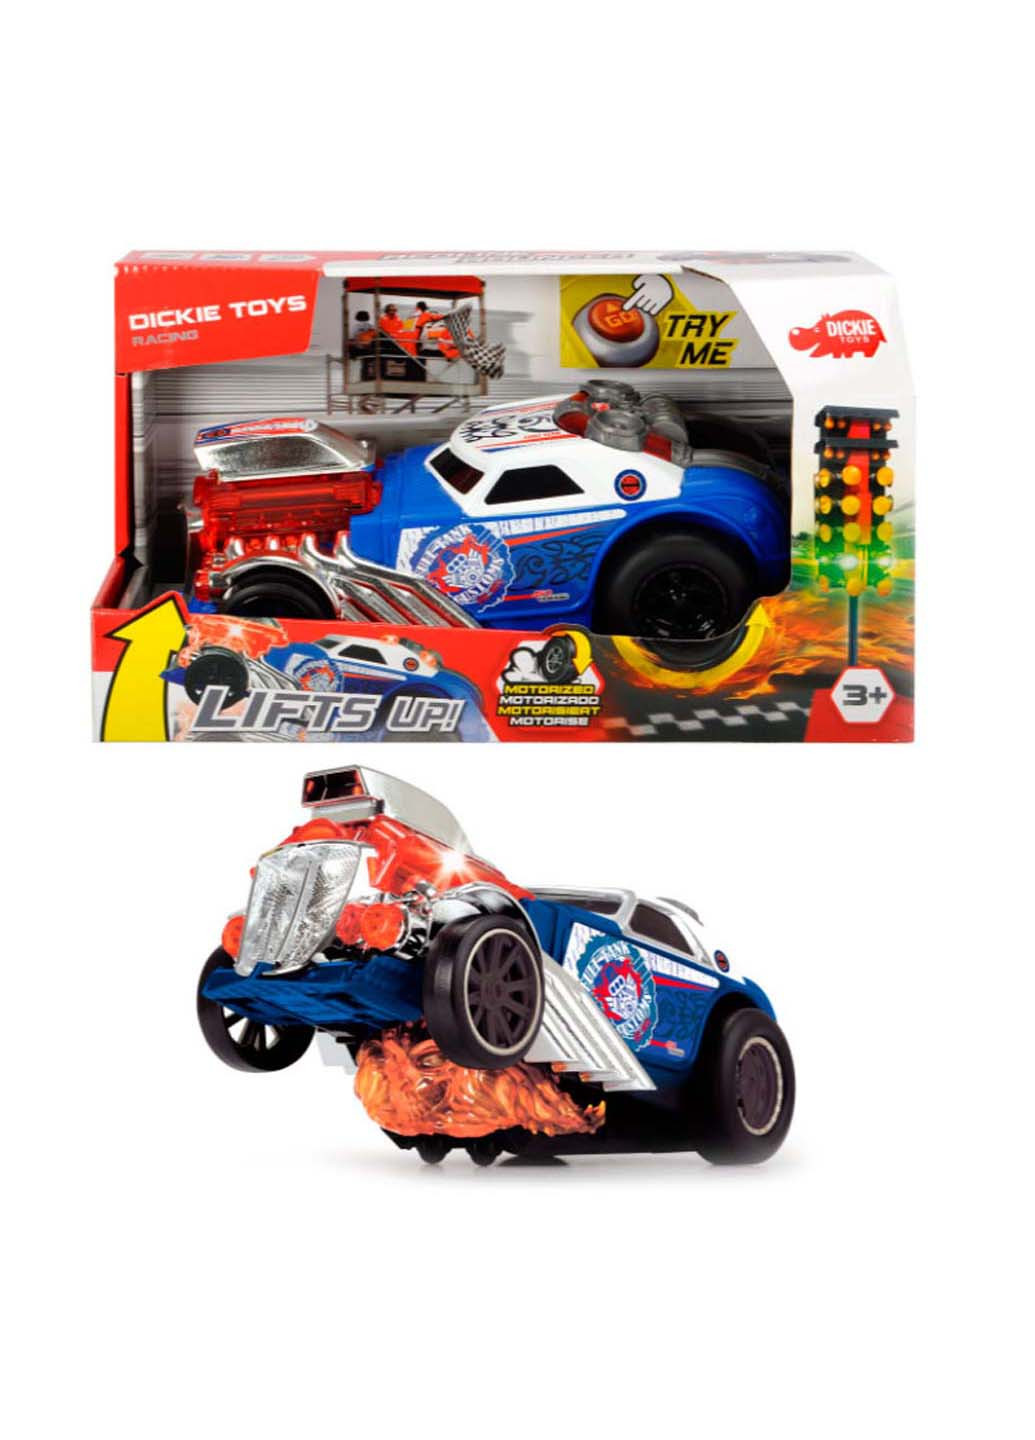 Іграшкова машинка Leap out of the flame їздить на задніх колесах Dickie toys (258842946)